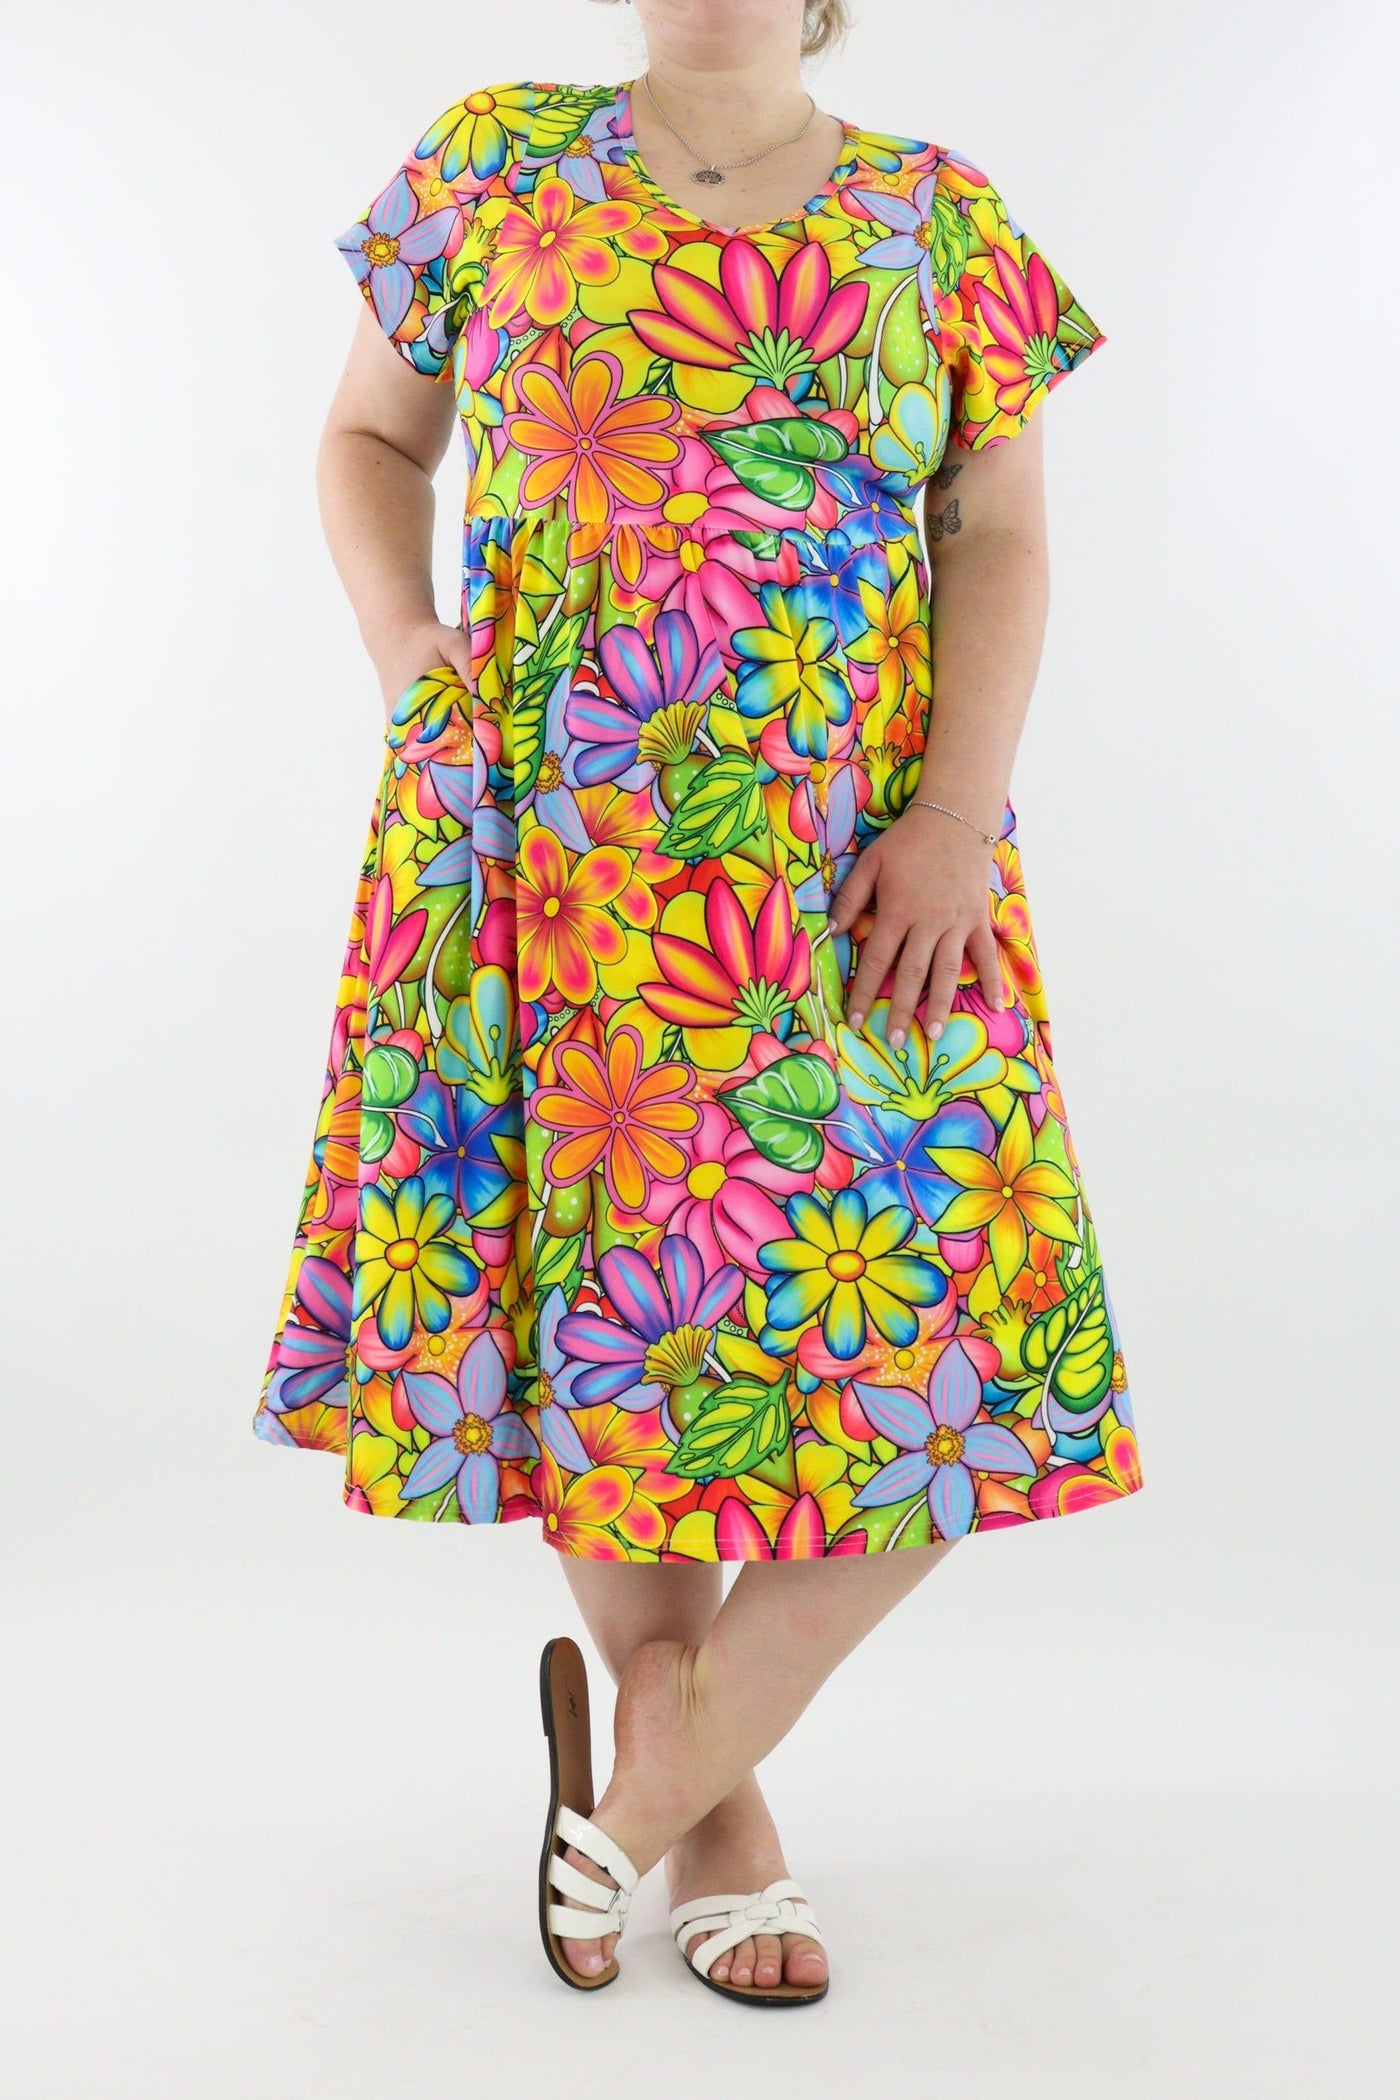 Tutti Frutti Flower - A-Line Dress - Midi Length - Side Pockets - Pawlie